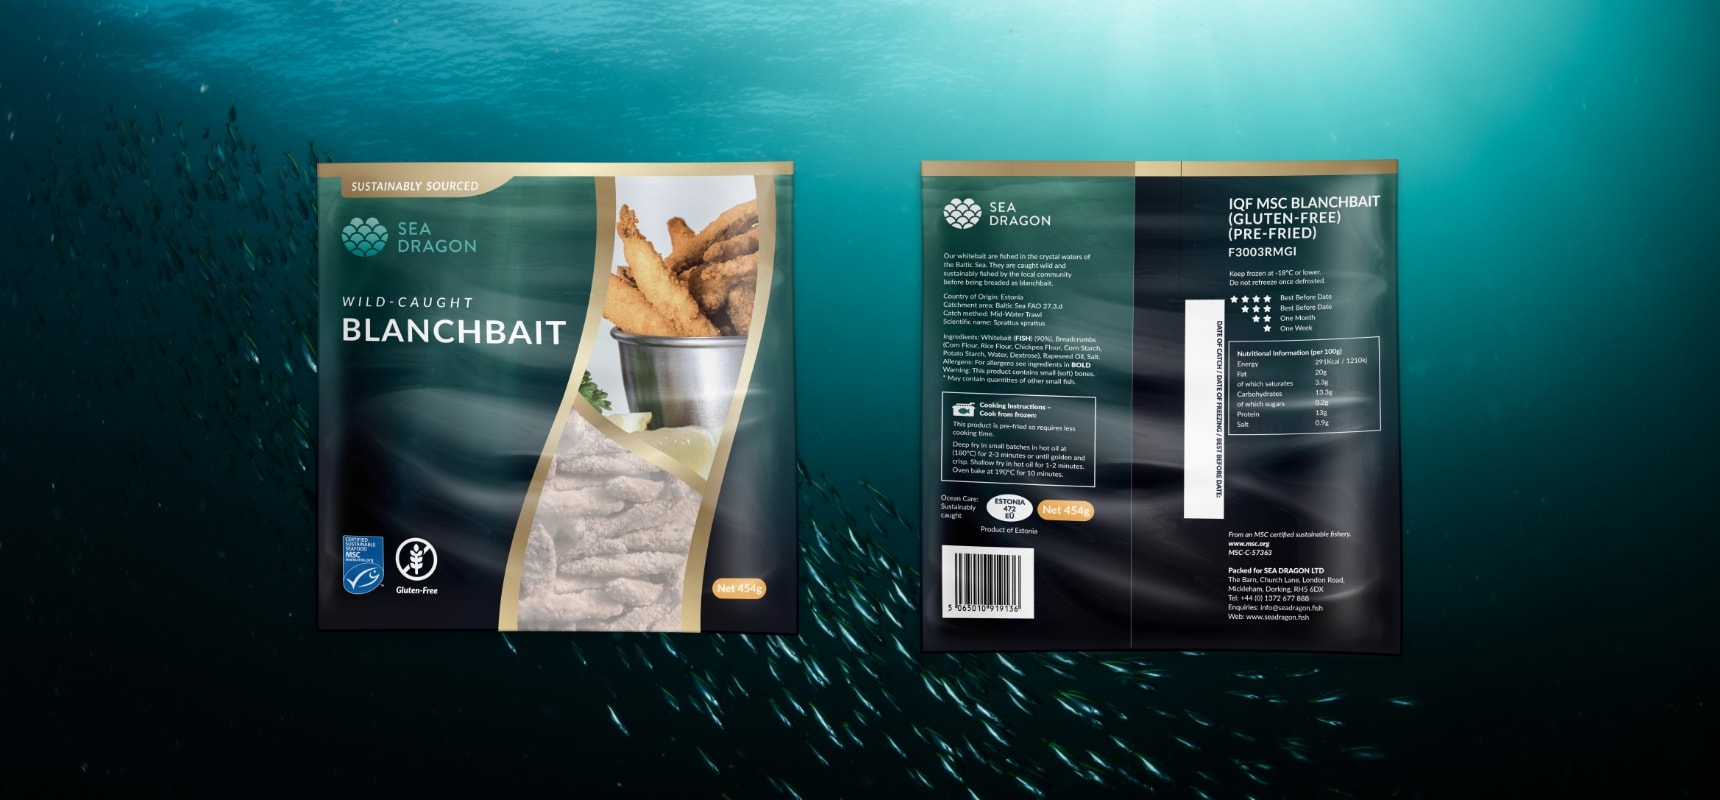 Sea Dragon blanchbait packaging design